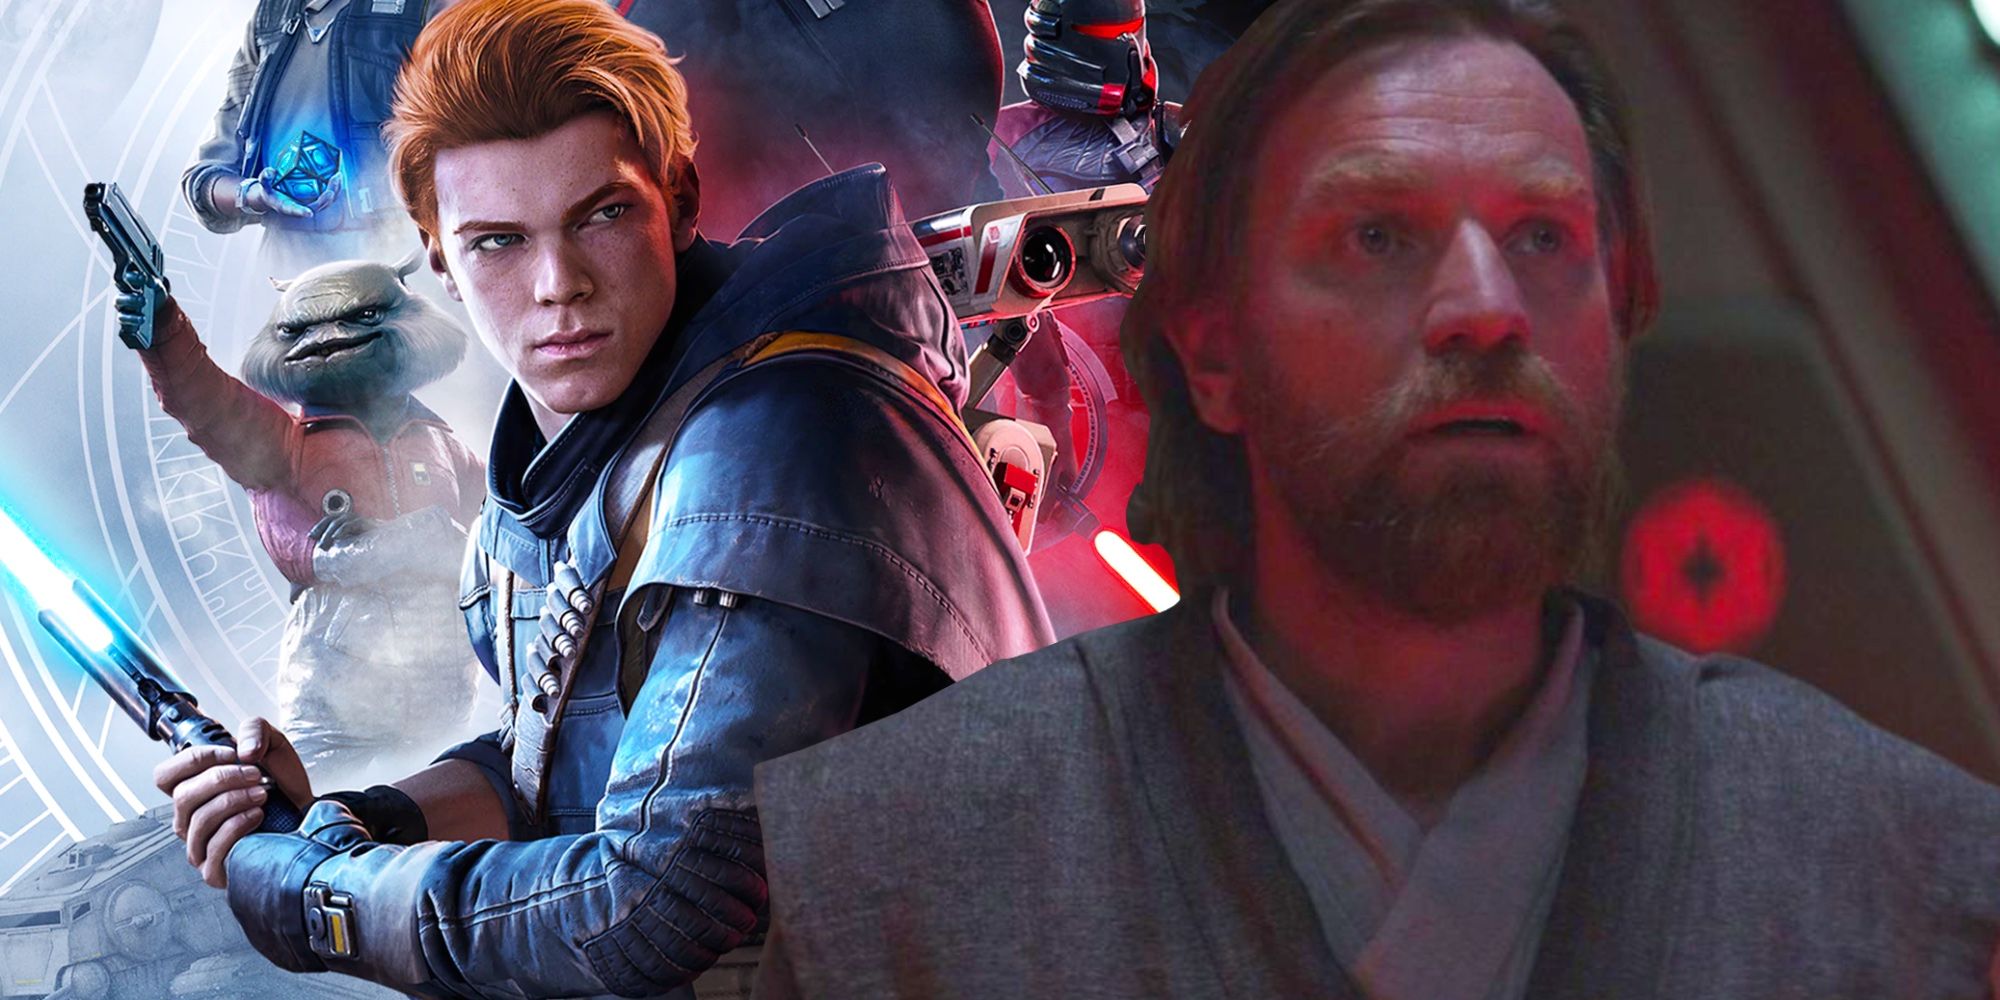 El episodio 4 de Obi-Wan Kenobi copia 5 cosas de la icónica Jedi-Fallen Order